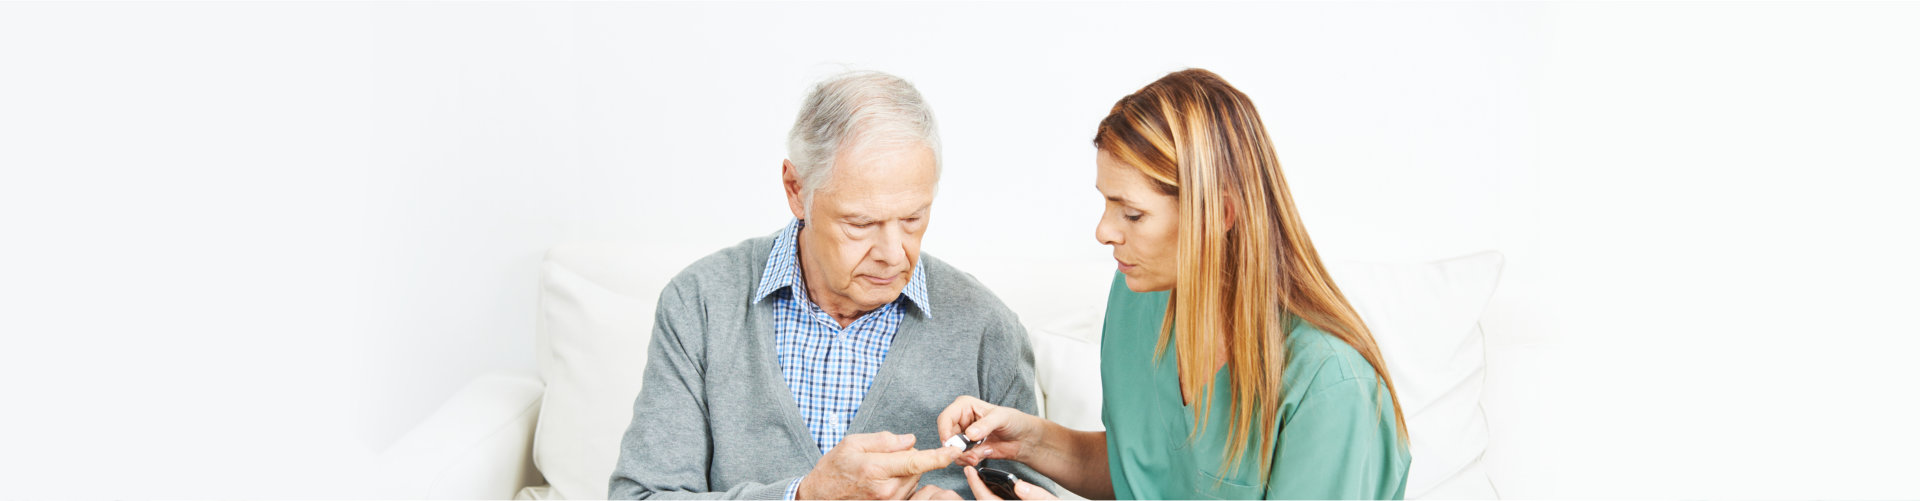 Blood glucose monitoring for senior men with diabetes in nursing home